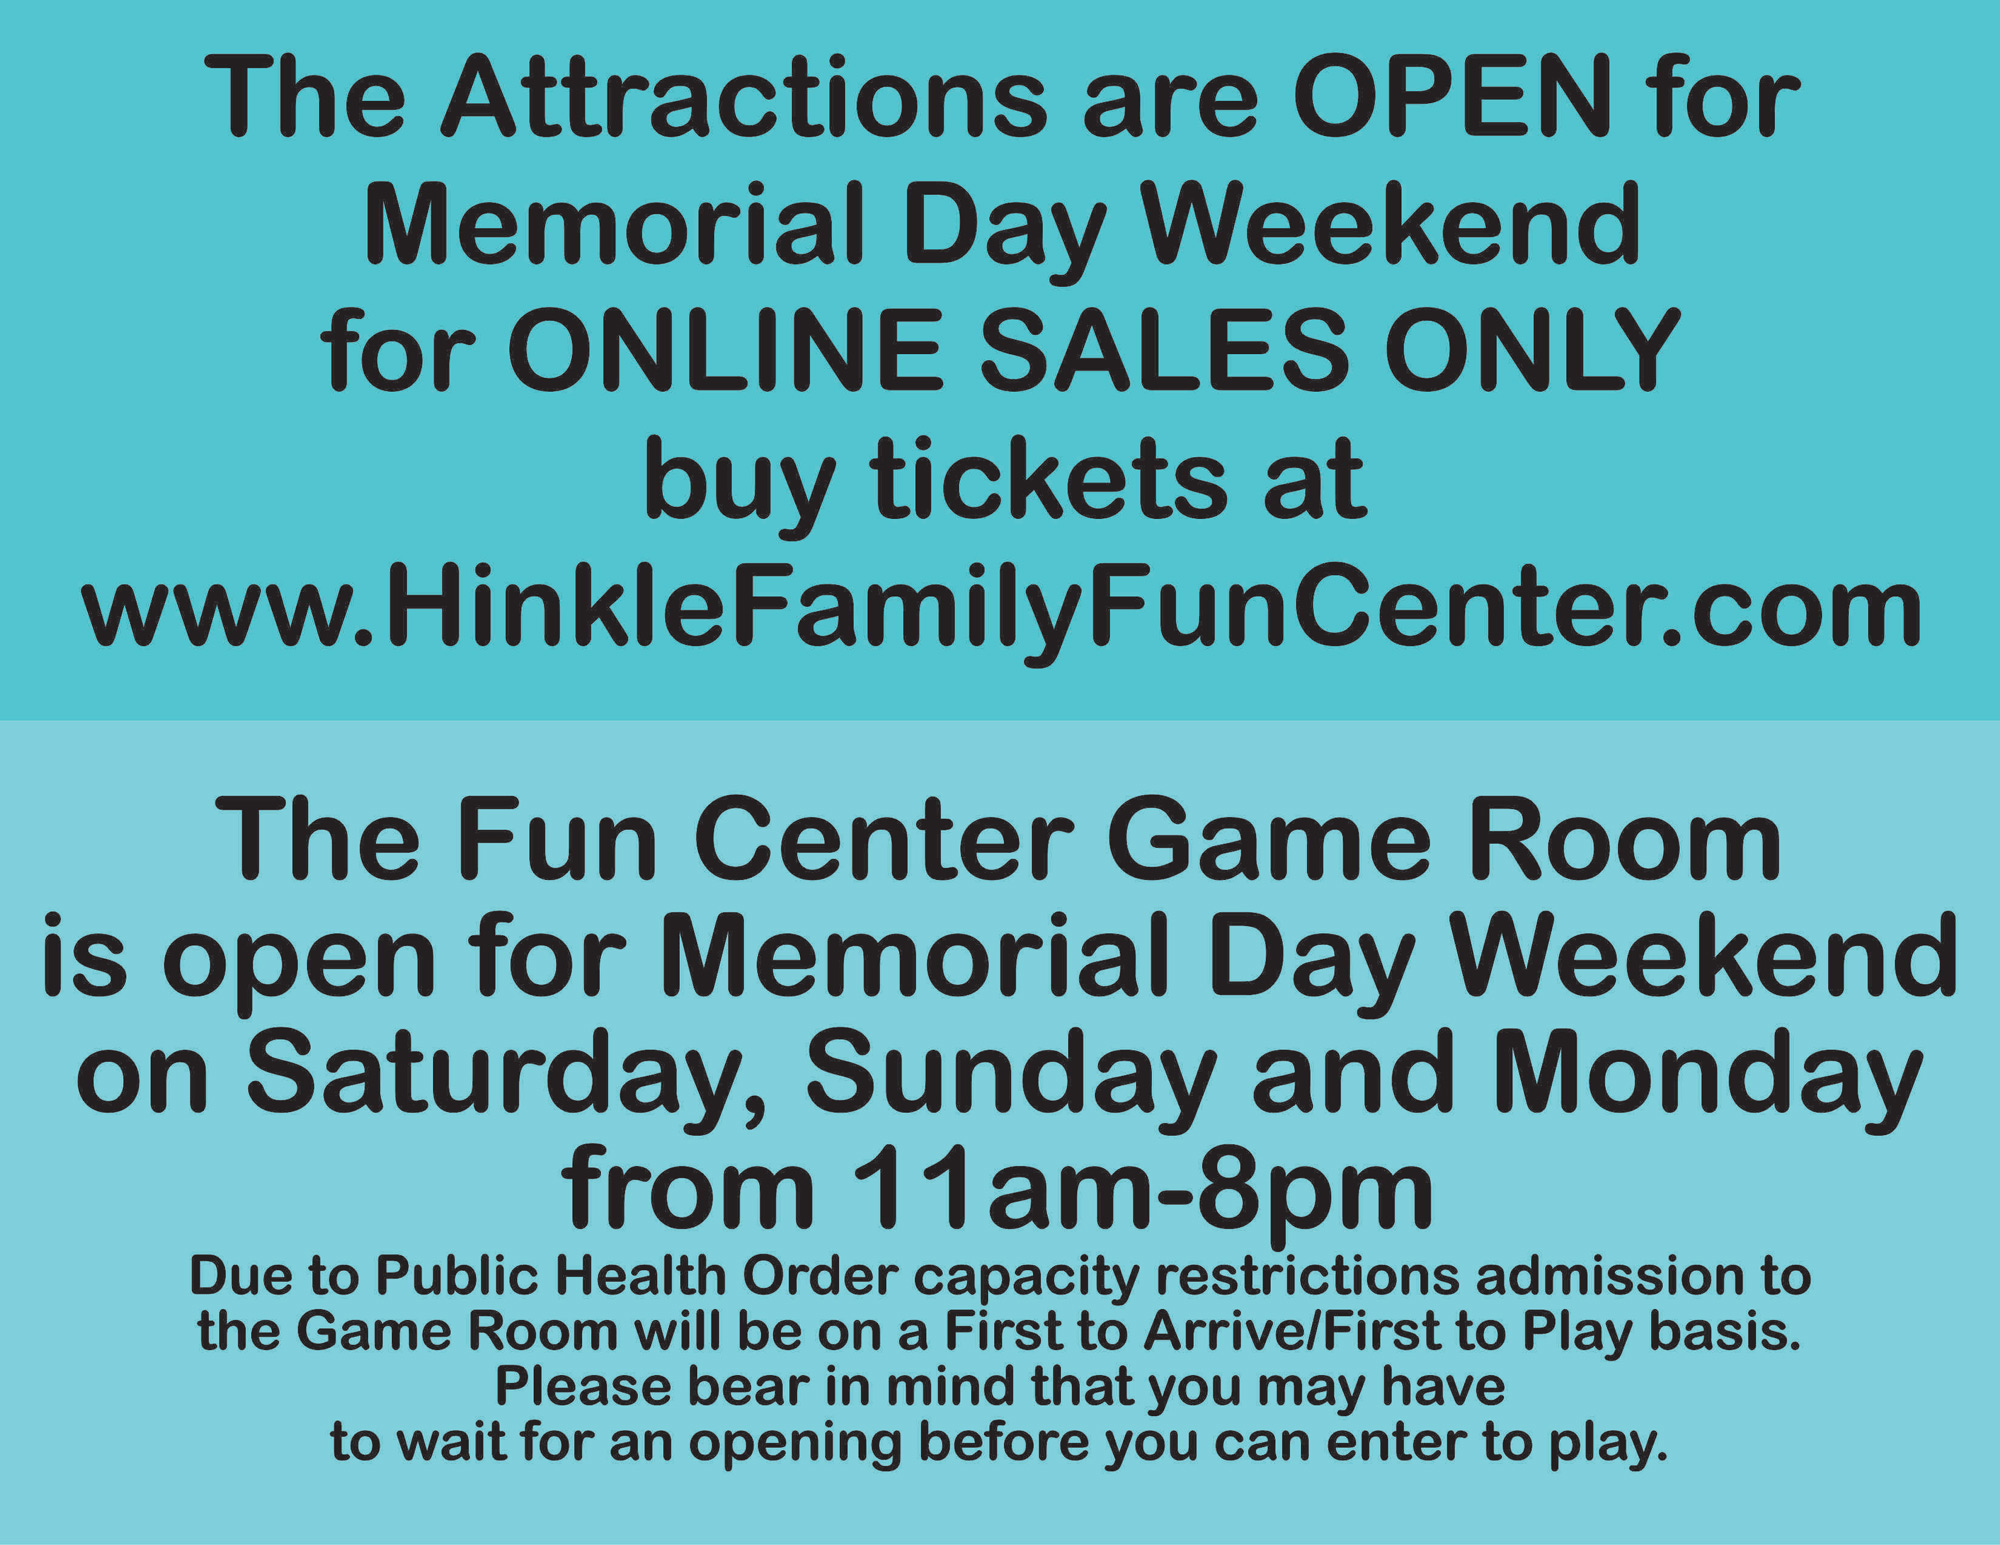 memorialdayhourssign Hinkle Family Fun Center